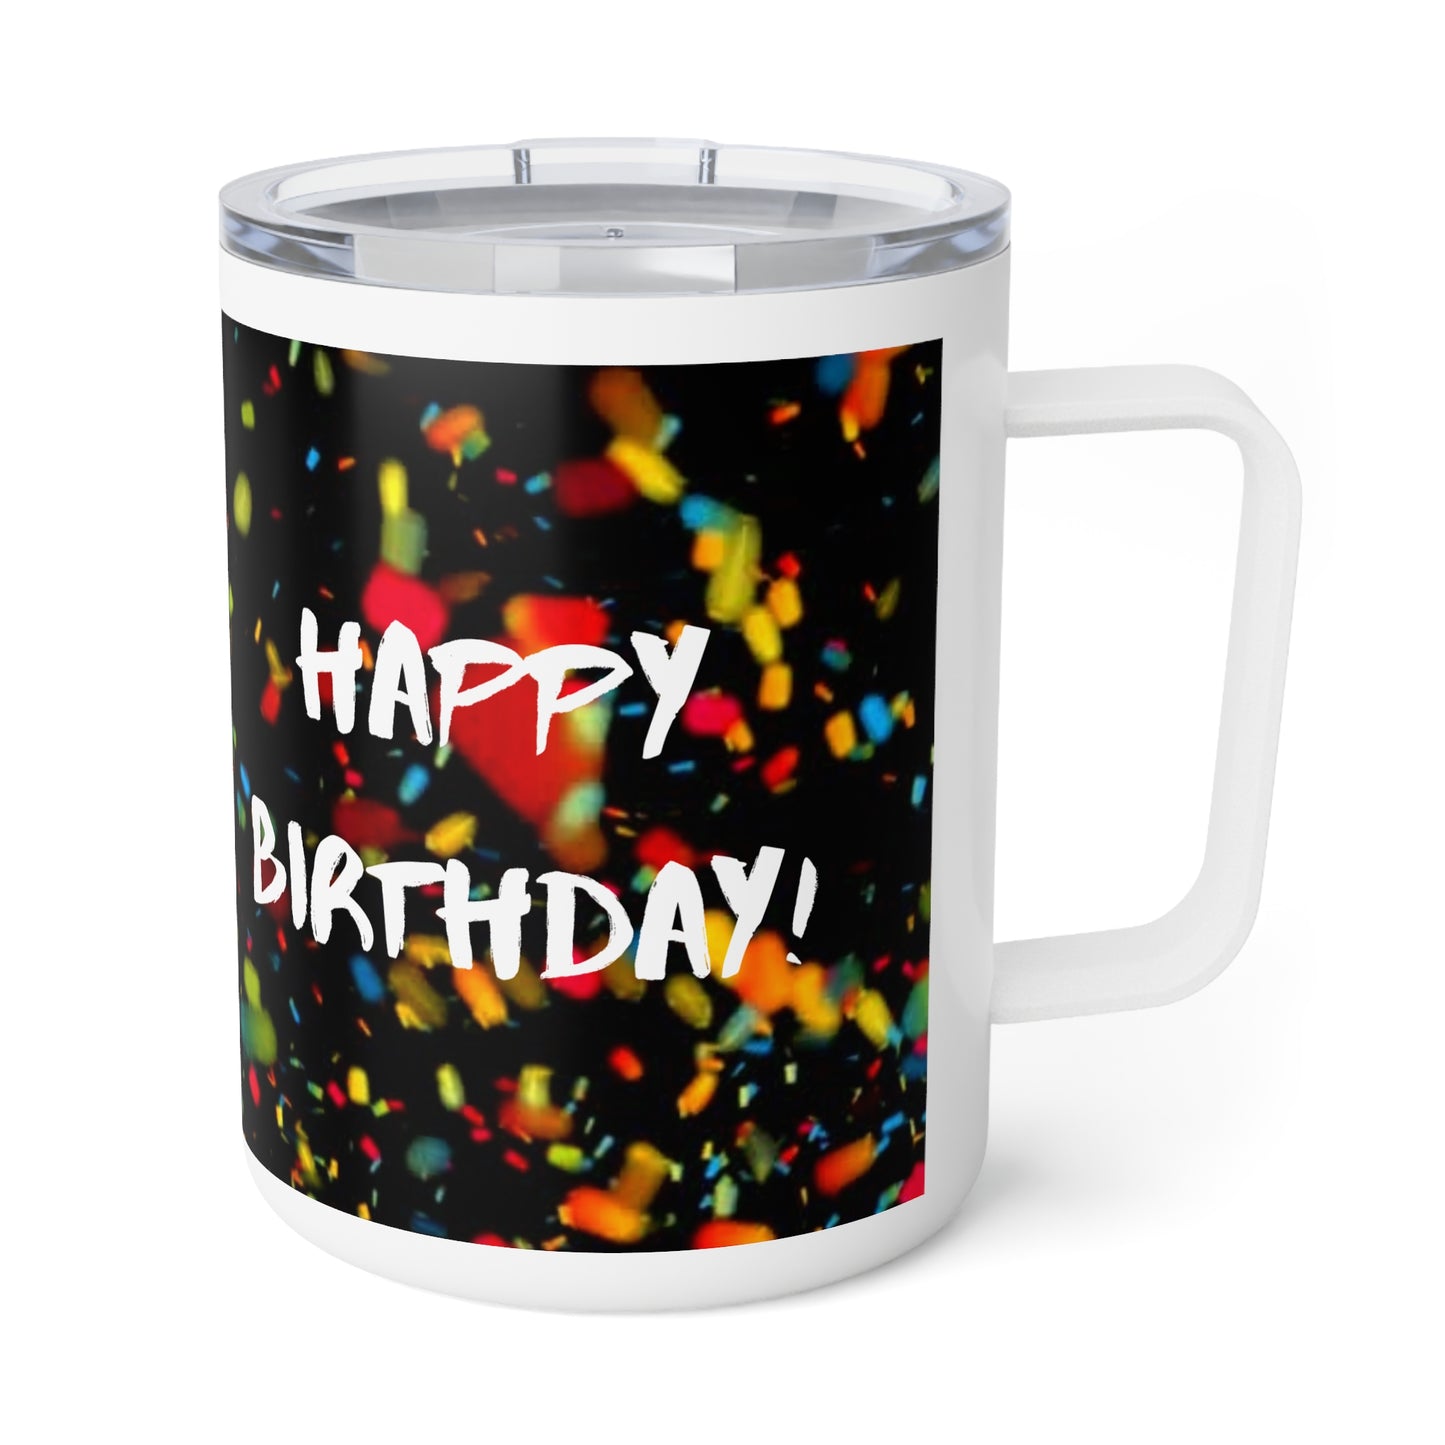 Happy Birthday Insulated Coffee Mugs, 10oz, Birthday Gift